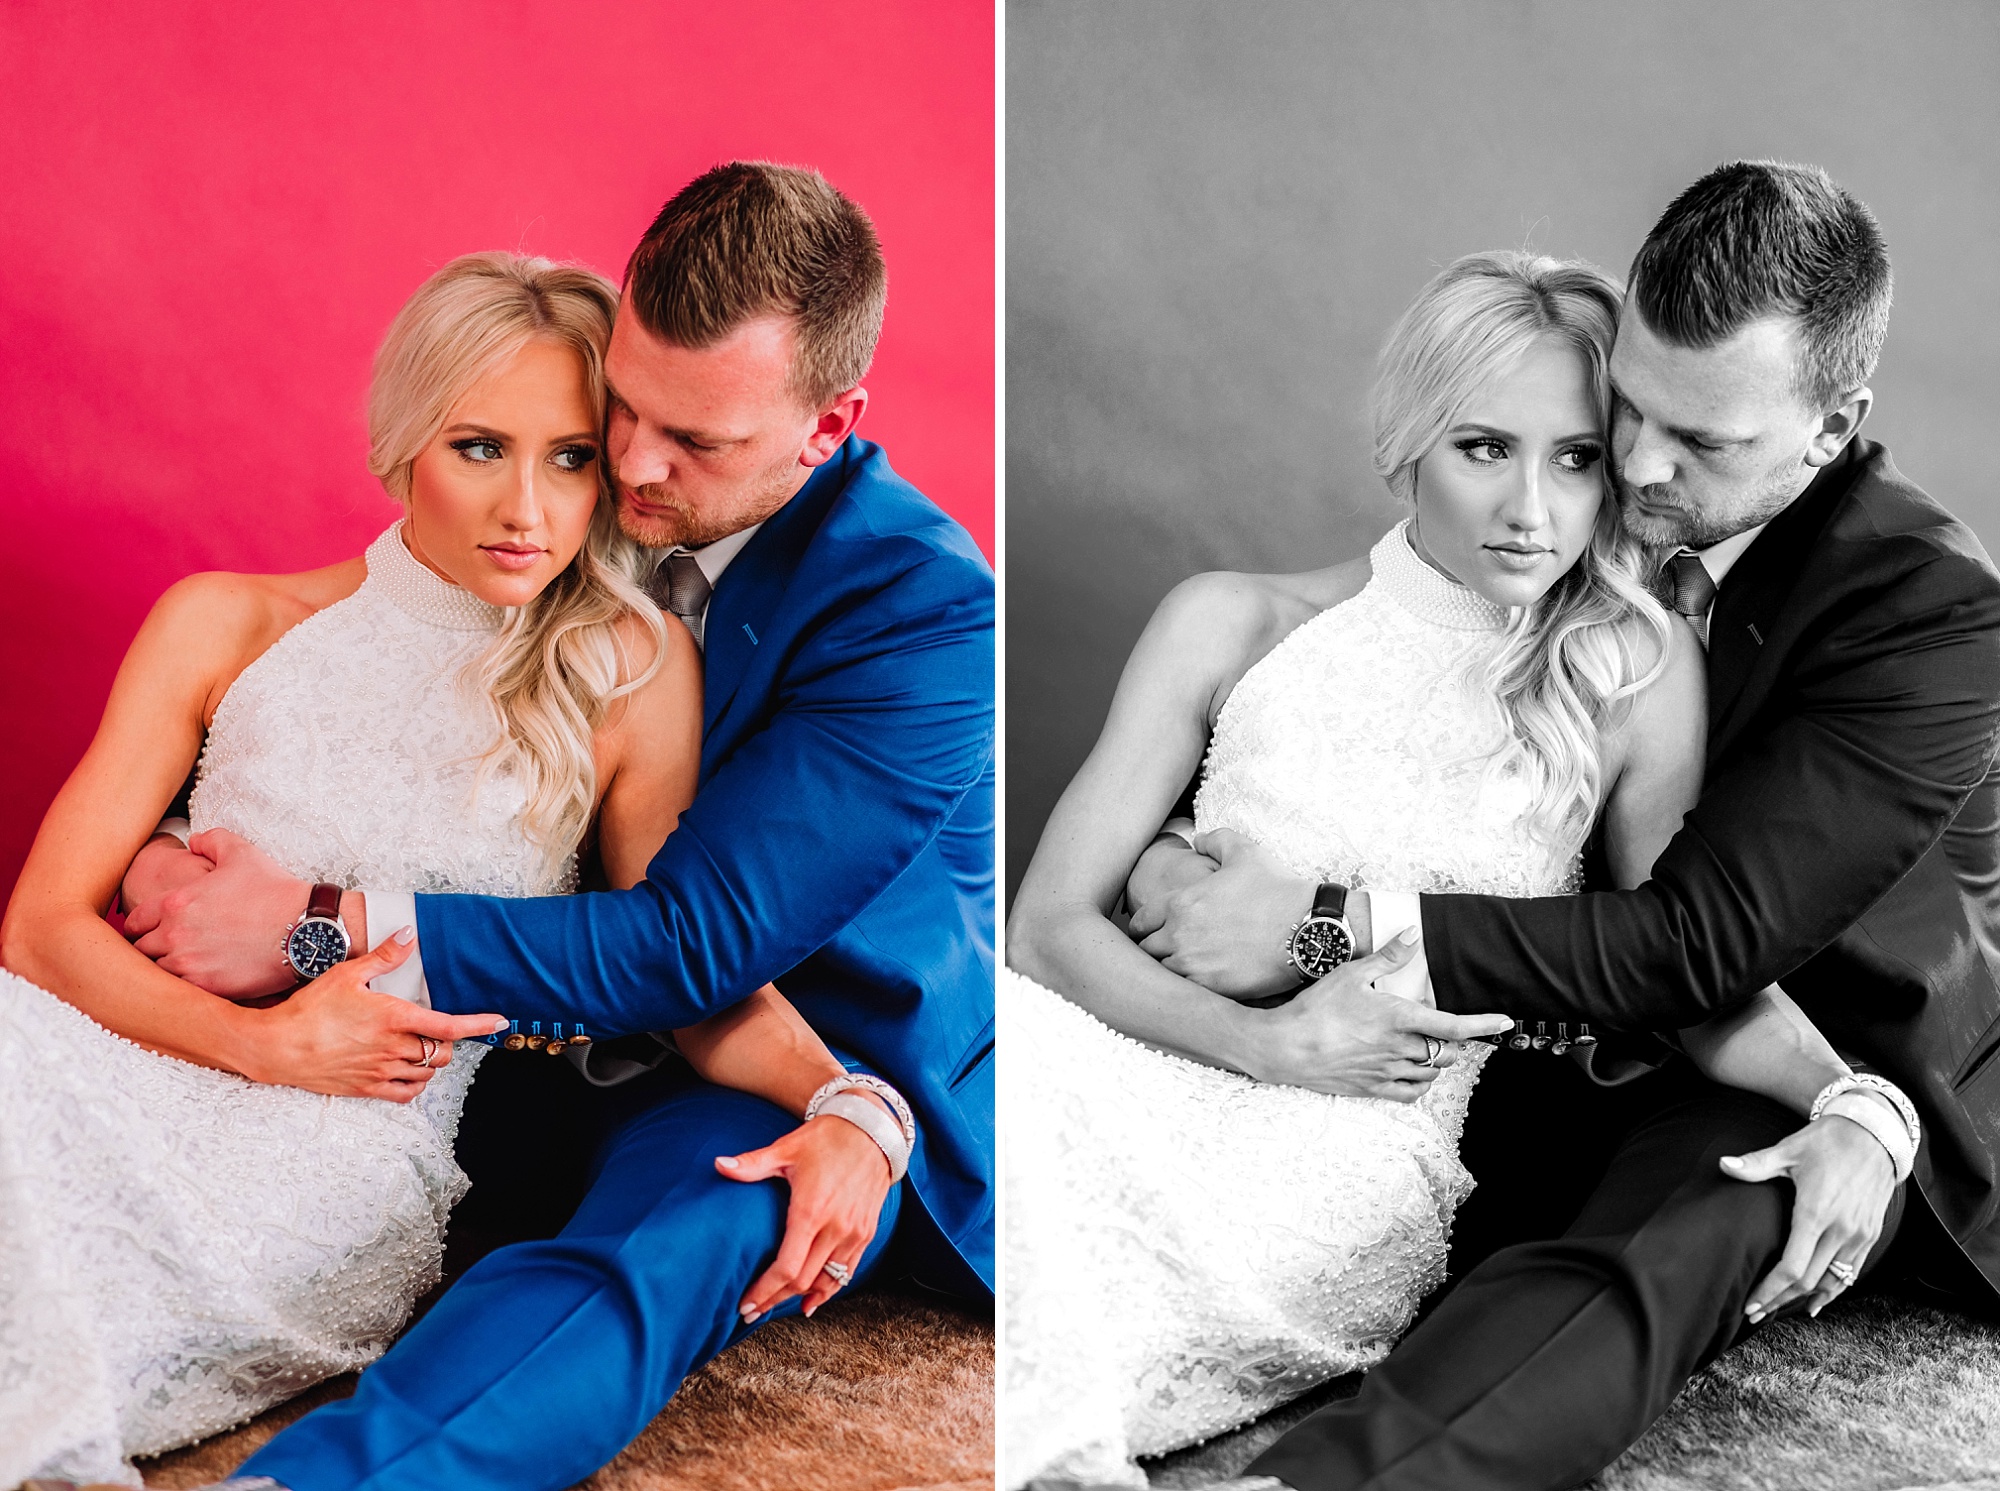 wedding-couple-snuggling-pink-studio-backdrop-rigby-idaho-wedding-photographer